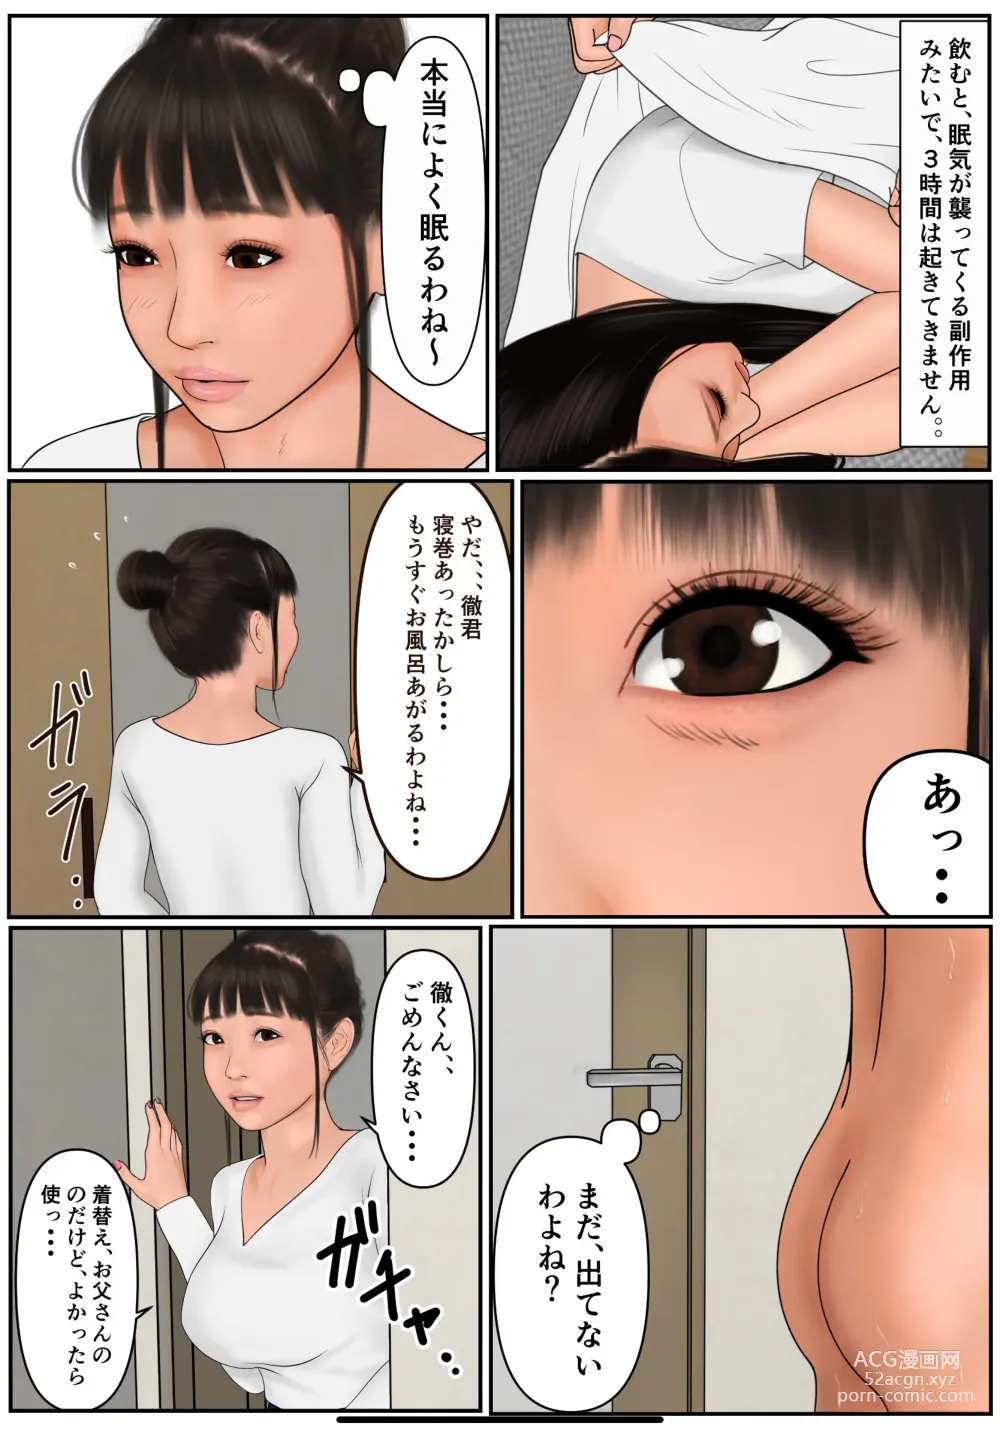 Page 13 of doujinshi Musume no Kareshi ni Oboreta Haha